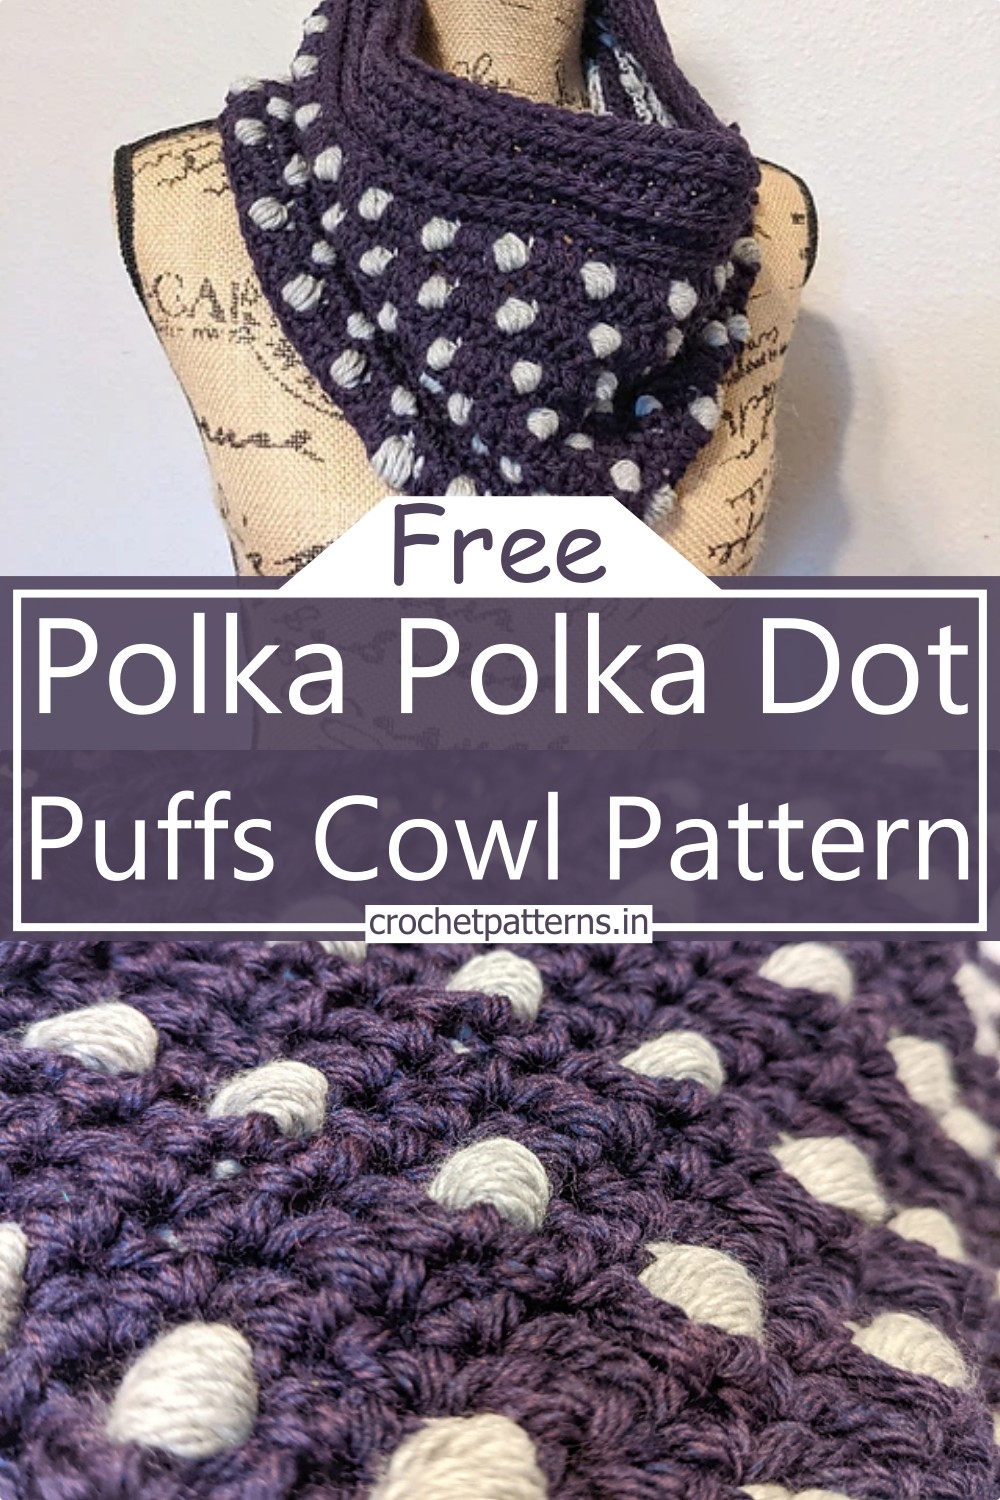 Polka Polka Dot Puffs Cowl Pattern